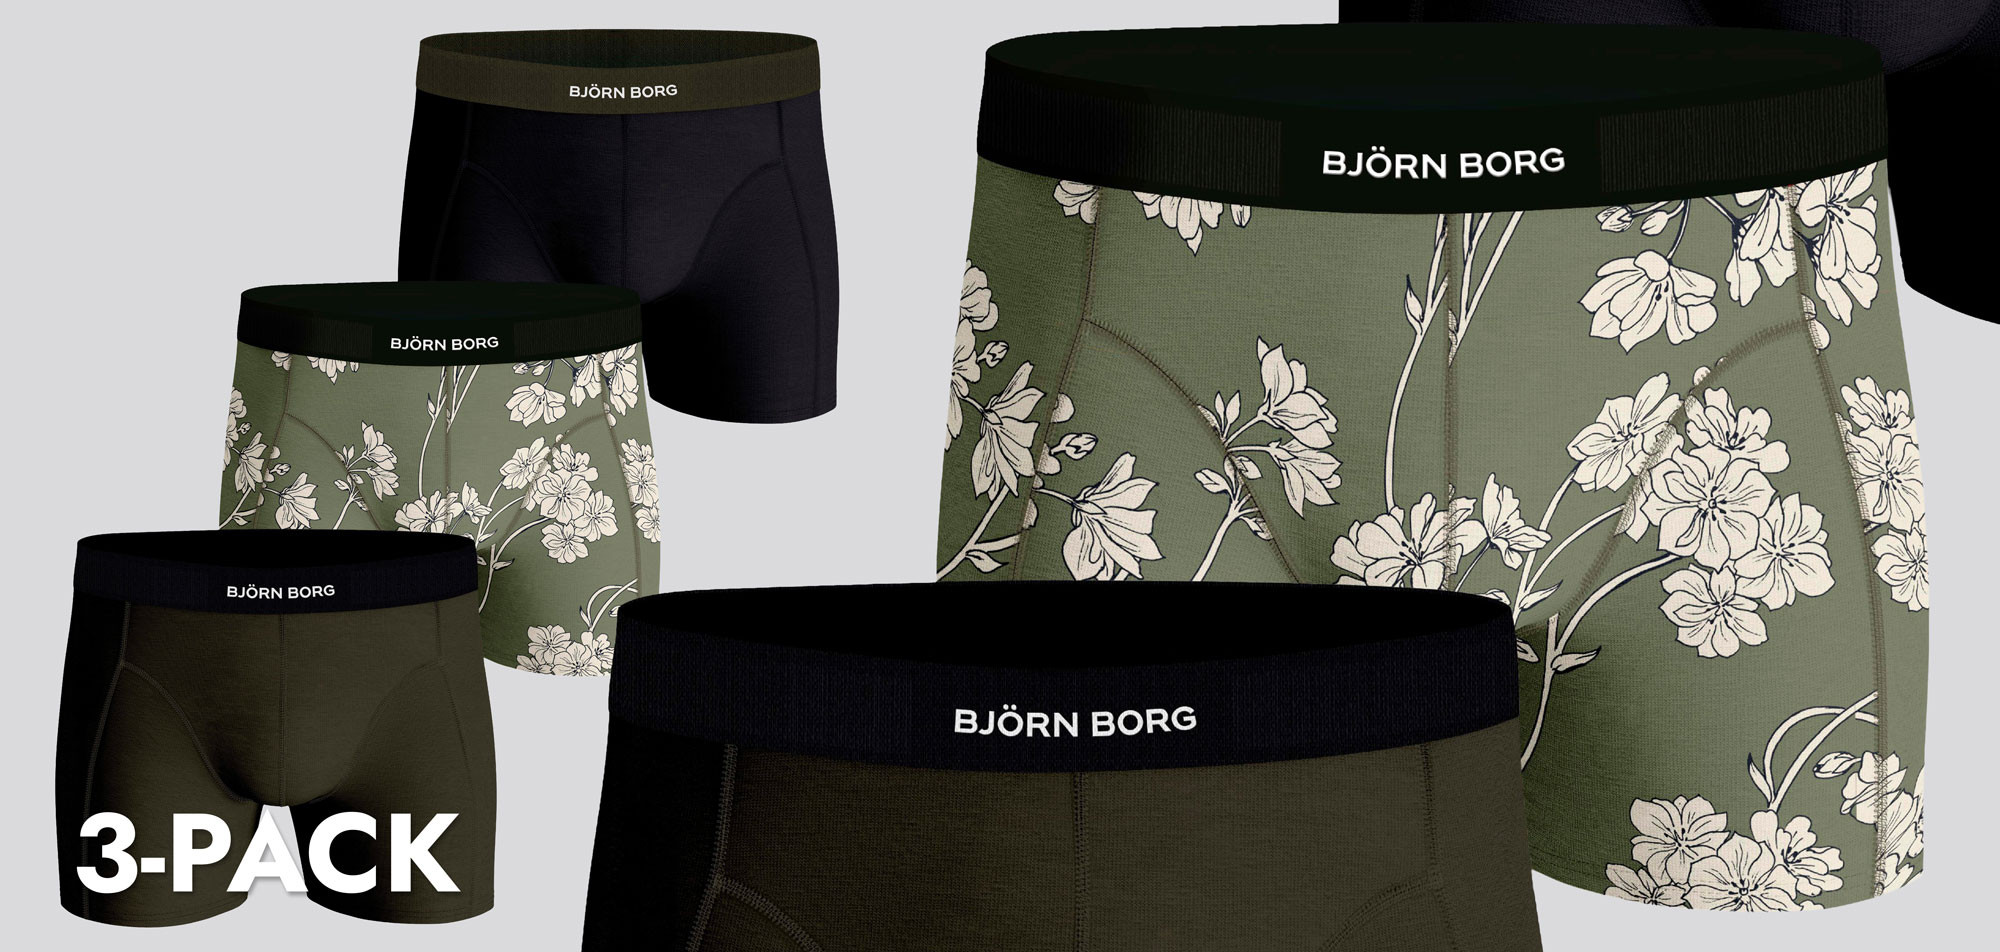 Bjorn Borg Boxershort 3-Pack 724 Premium Cotton MP002, color Nee